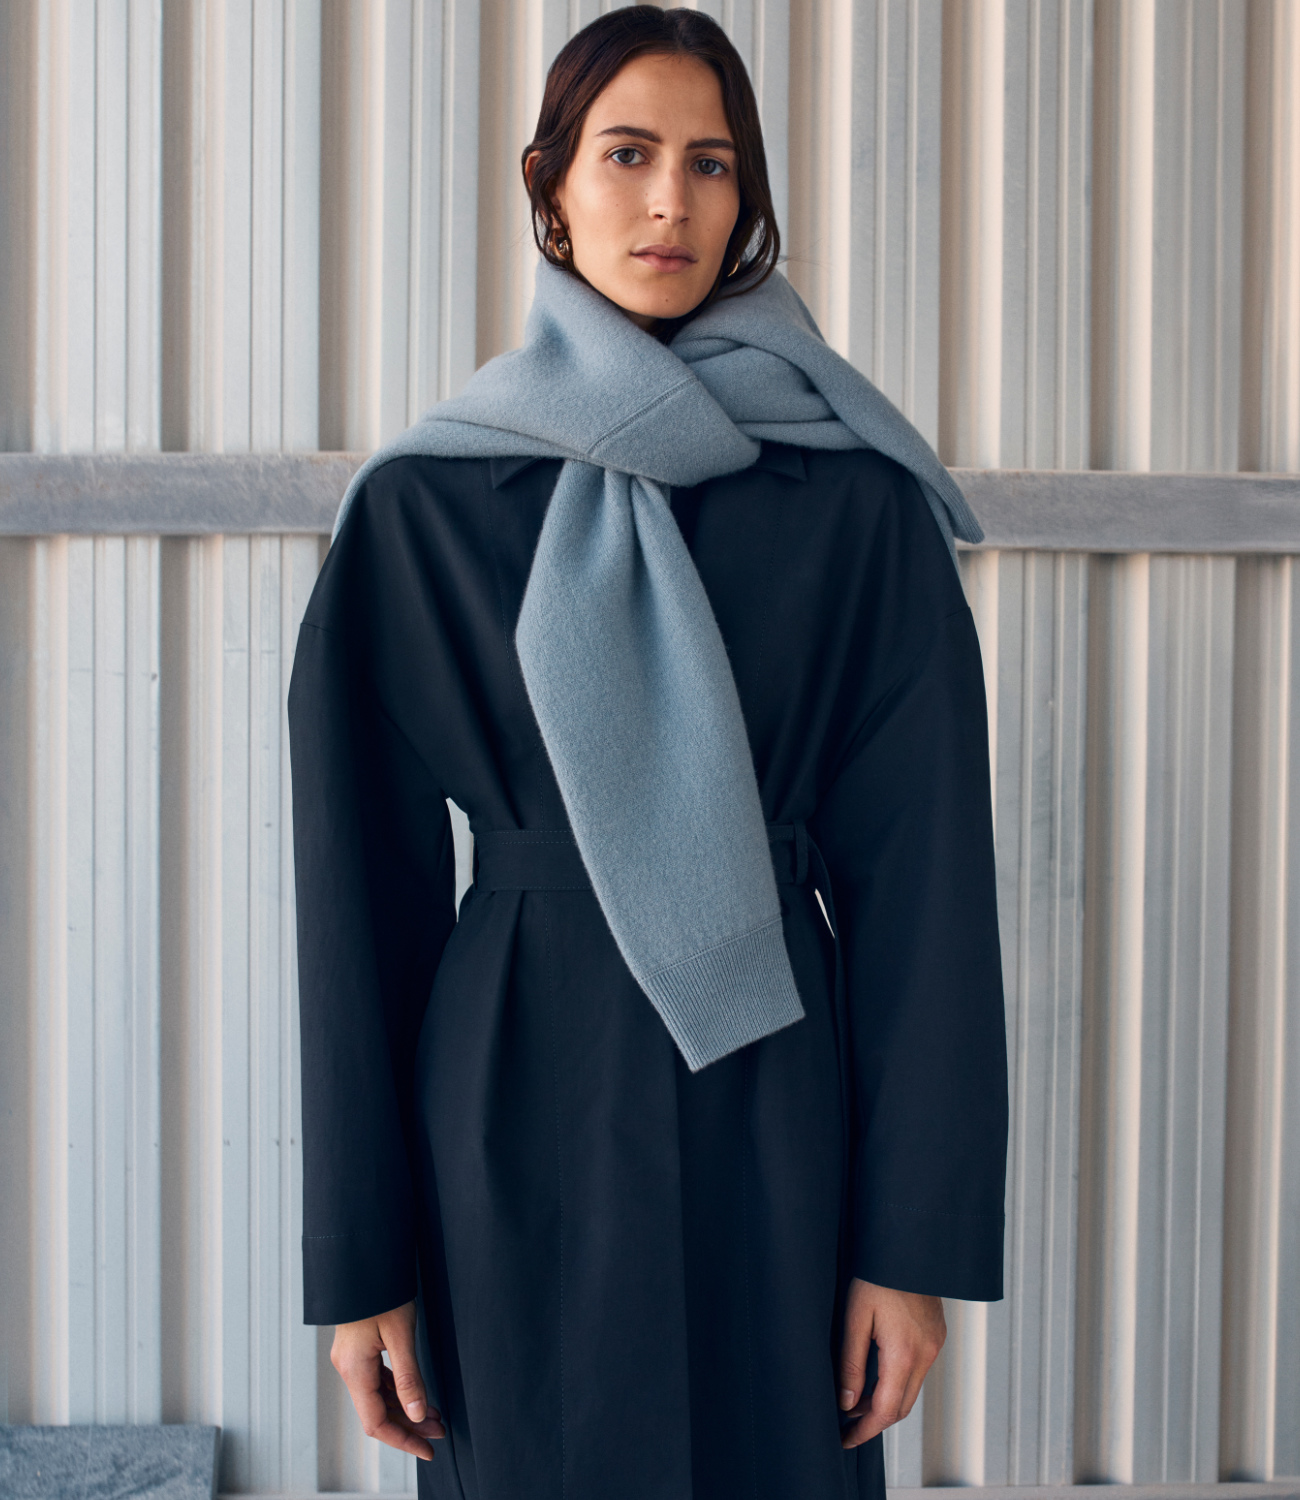 Studio Nicholson's Designer Explains Second Zara Collab